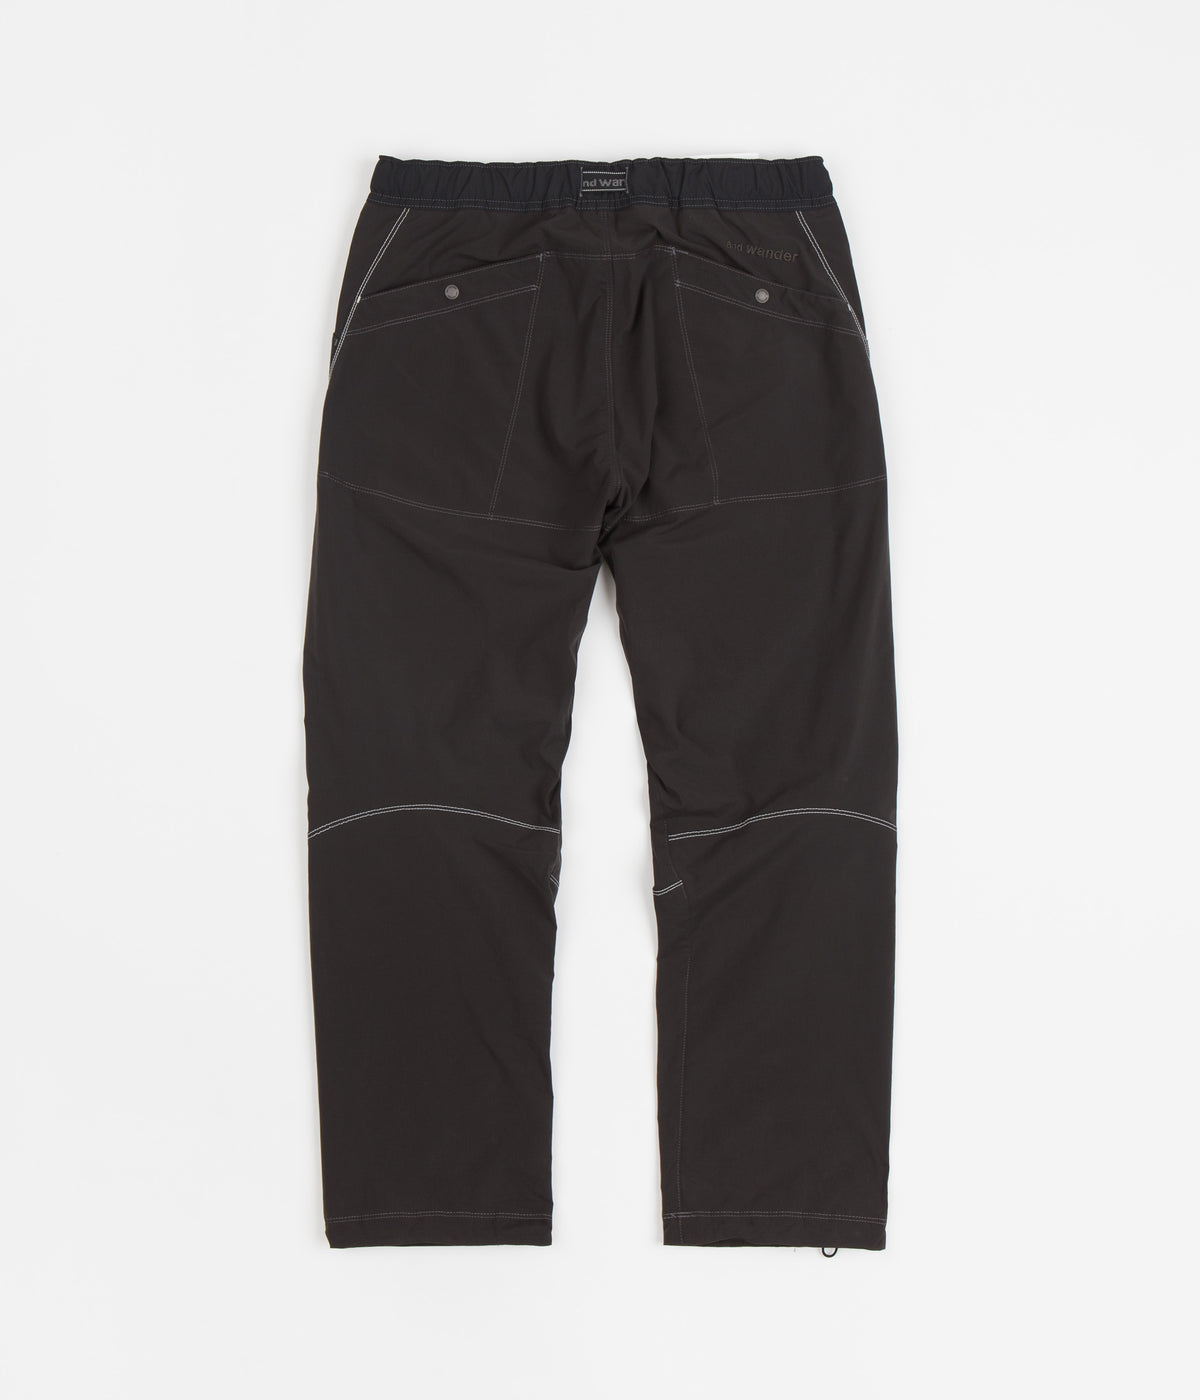 Denim & Co Tall Duo Stretch Pant Side Pocket A518936 Black